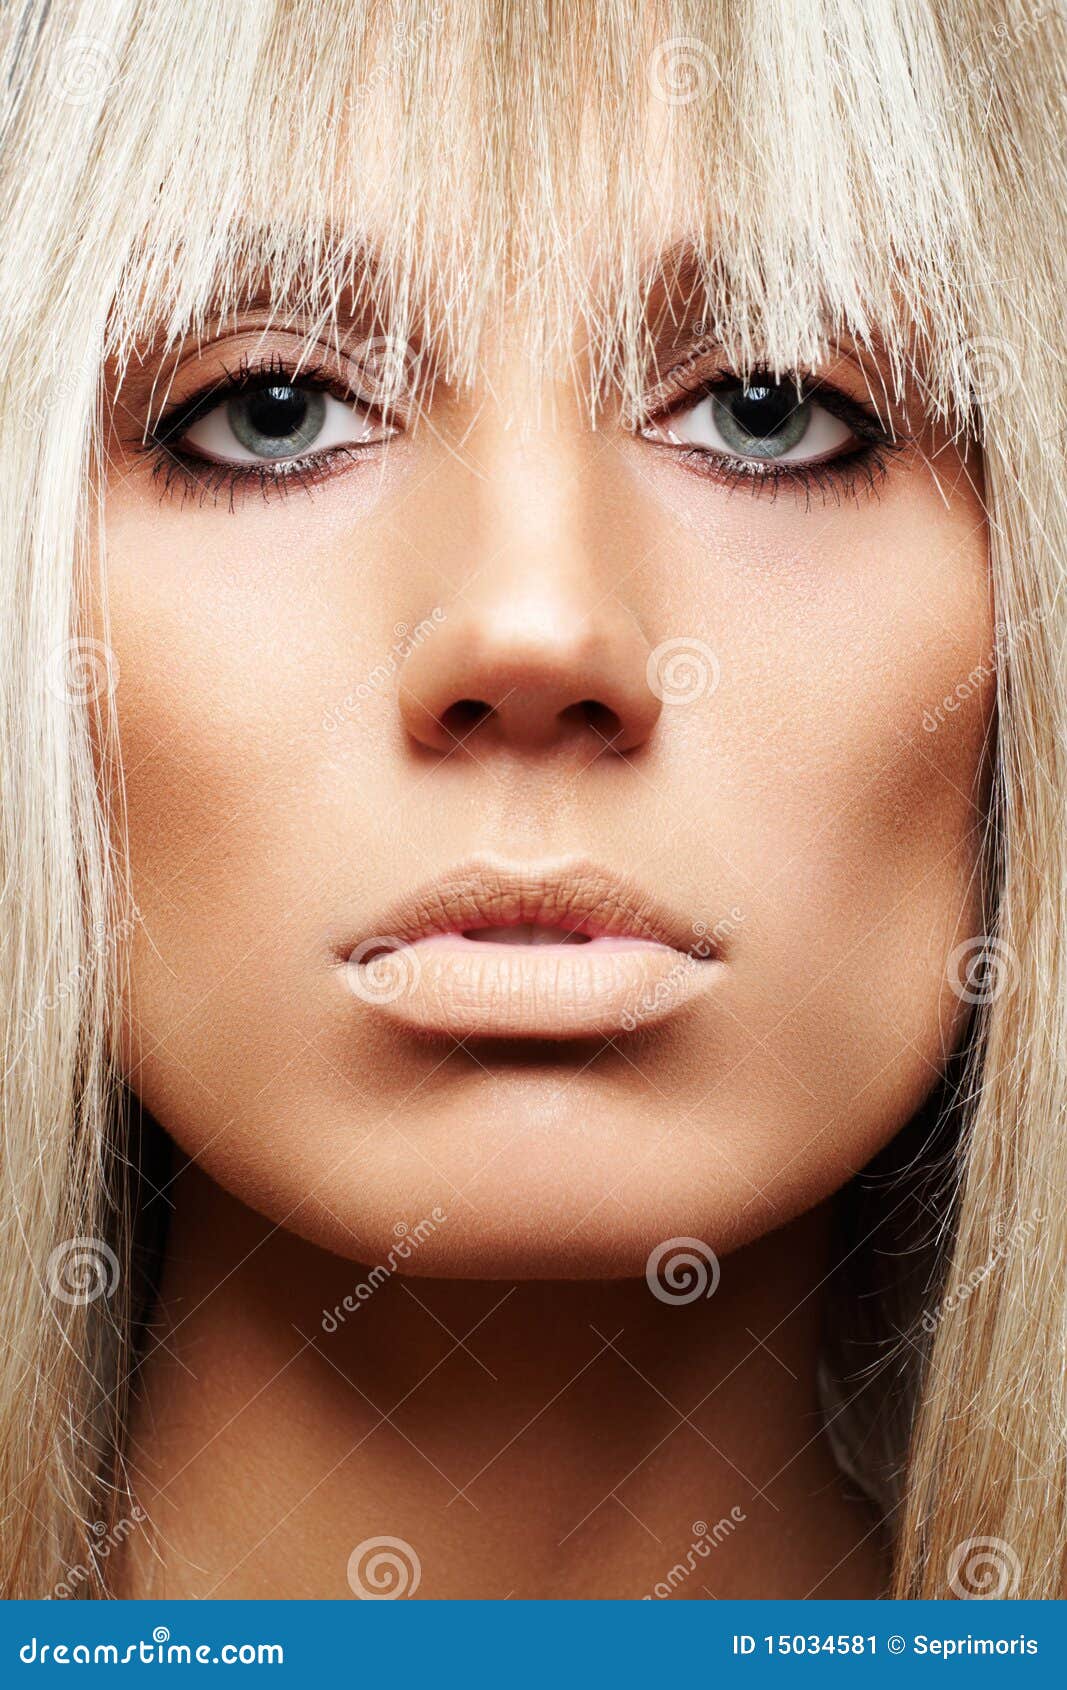 Brown eyes blonde hair makeup 3 women